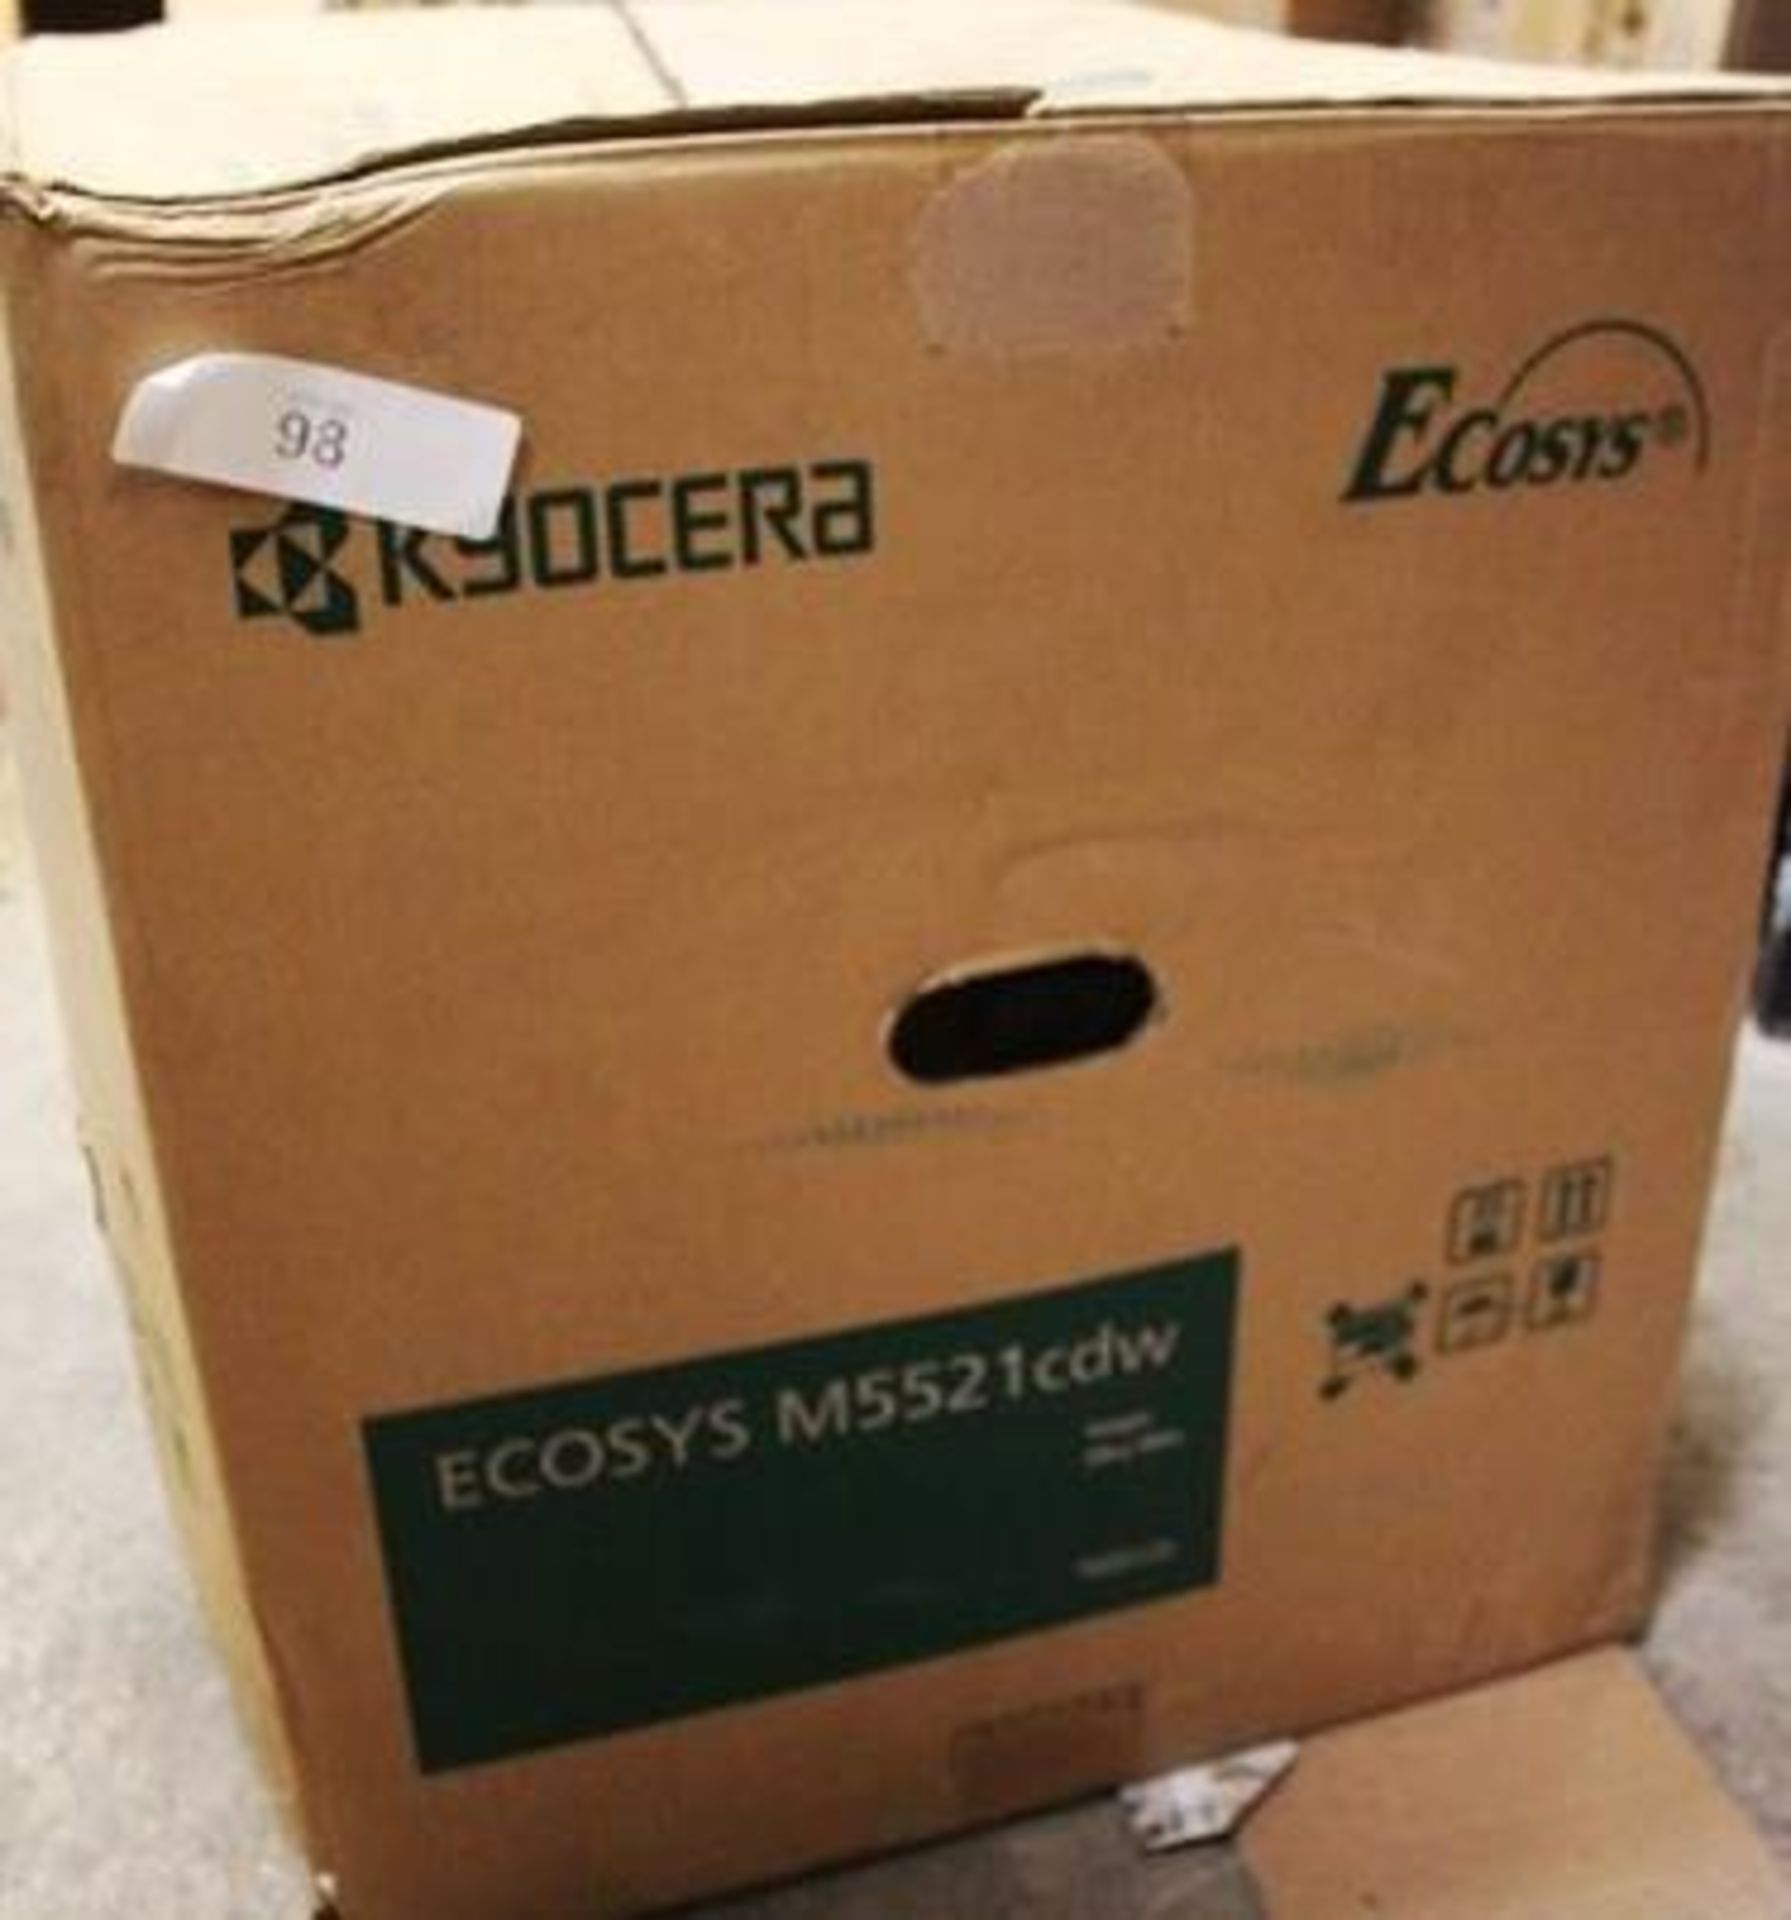 1 x Kyocera Ecosys, model M5521CDW - New (ES7)